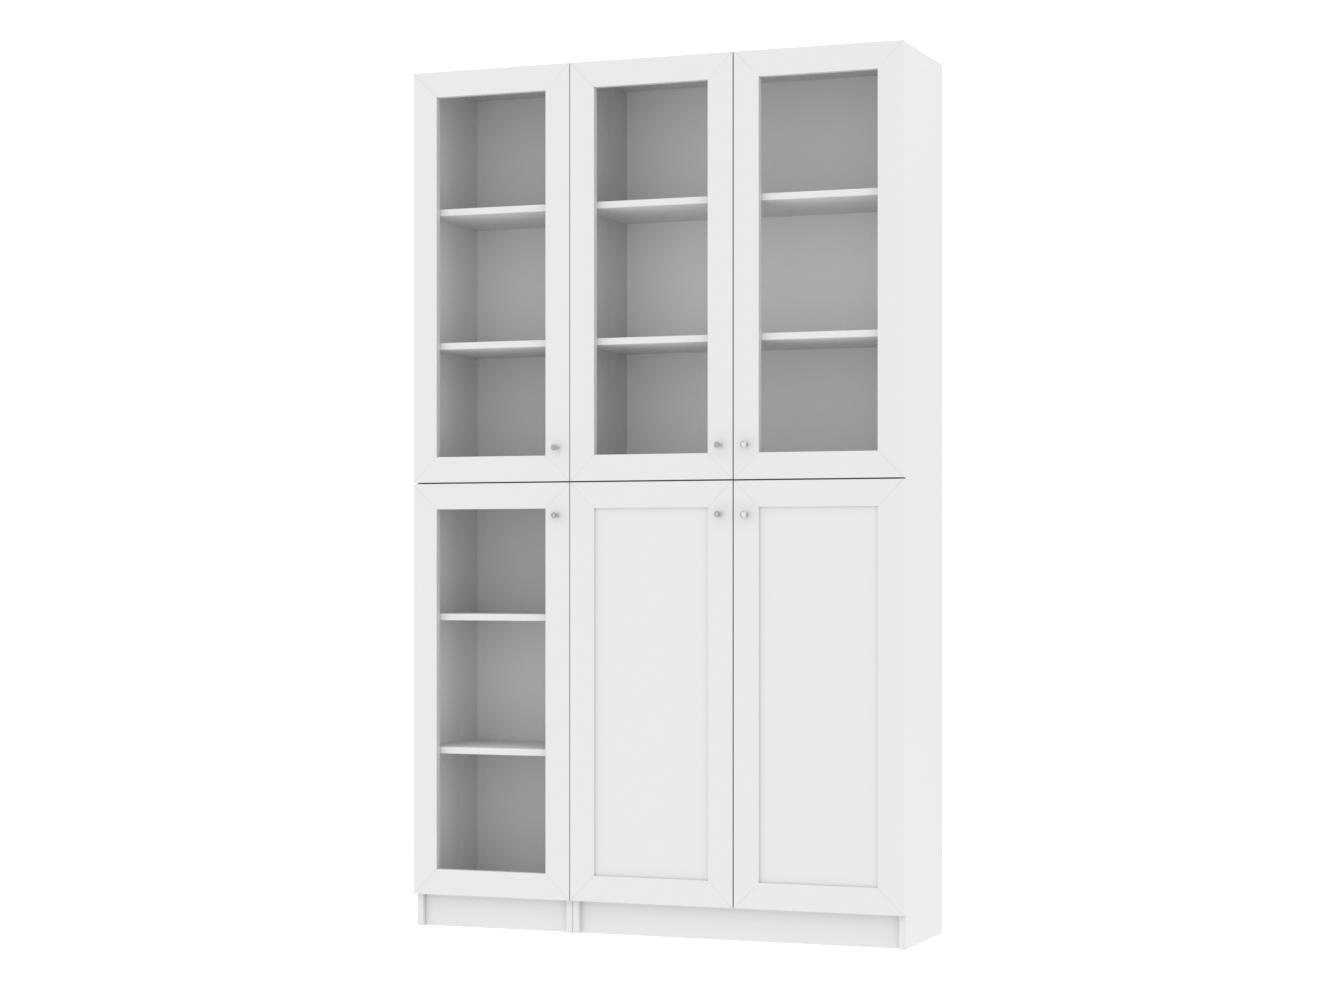 Книжный шкаф Билли 392 white desire ИКЕА (IKEA) изображение товара